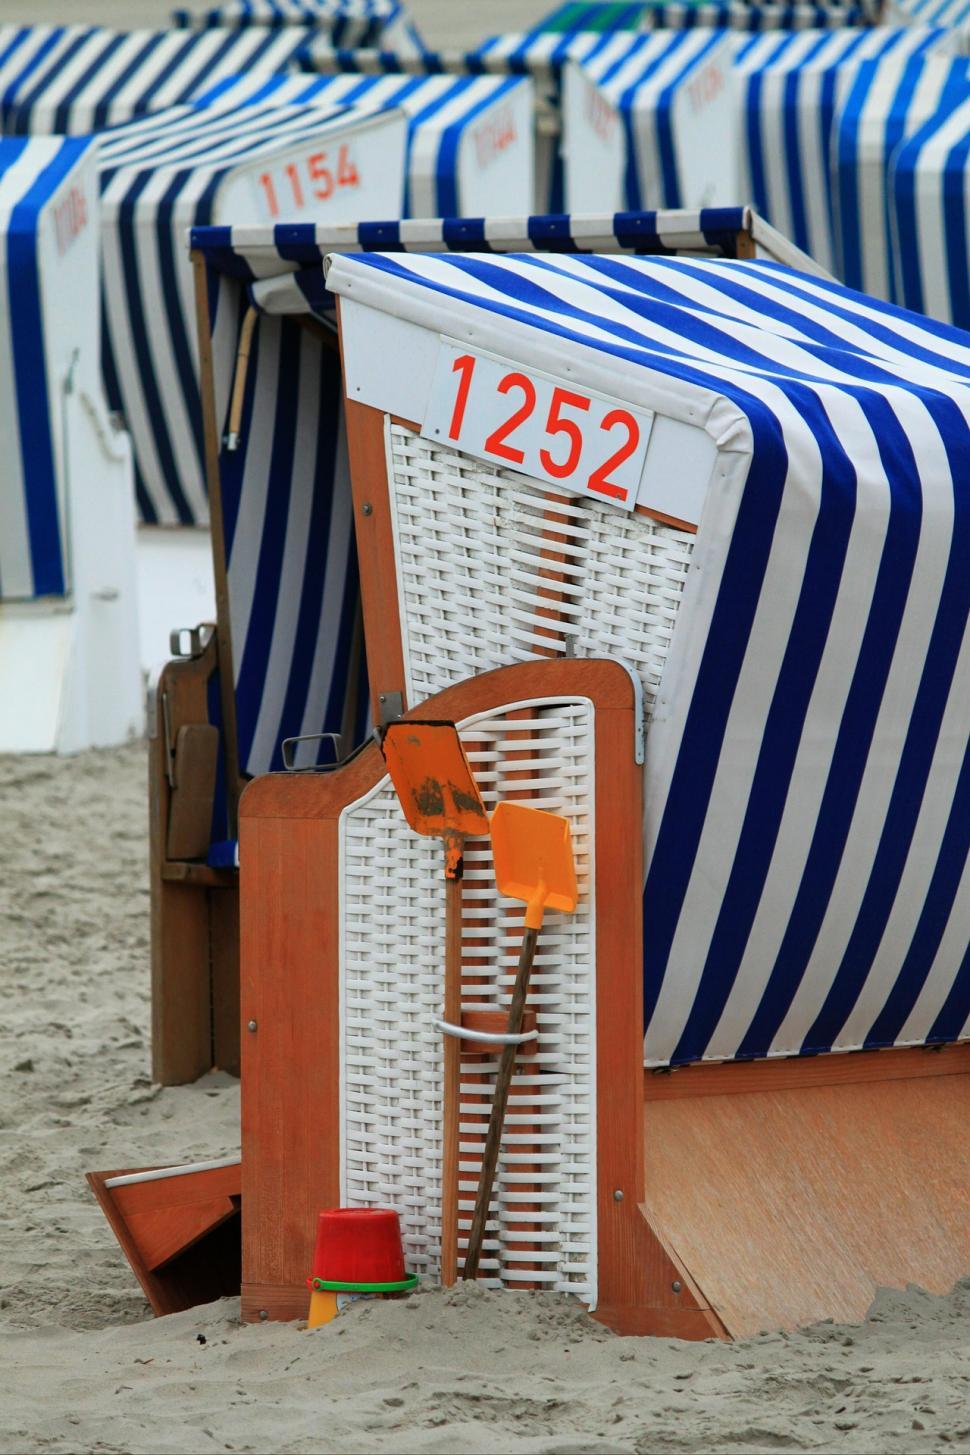 Free Image of Row of Beach Chairs on Sandy Beach 